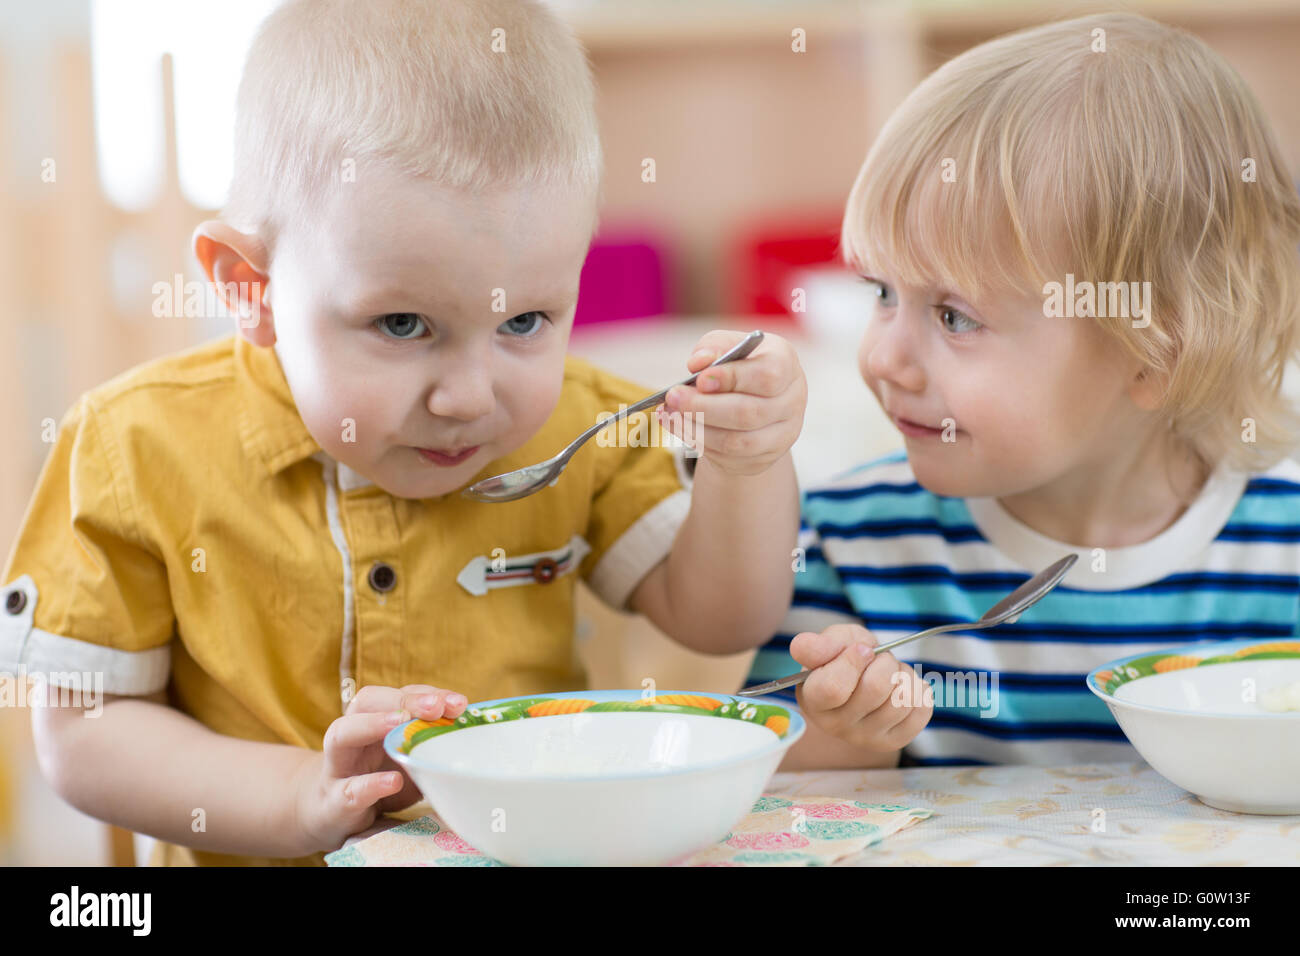 Funny smiling little kid eating in kindergarten Stock Photo